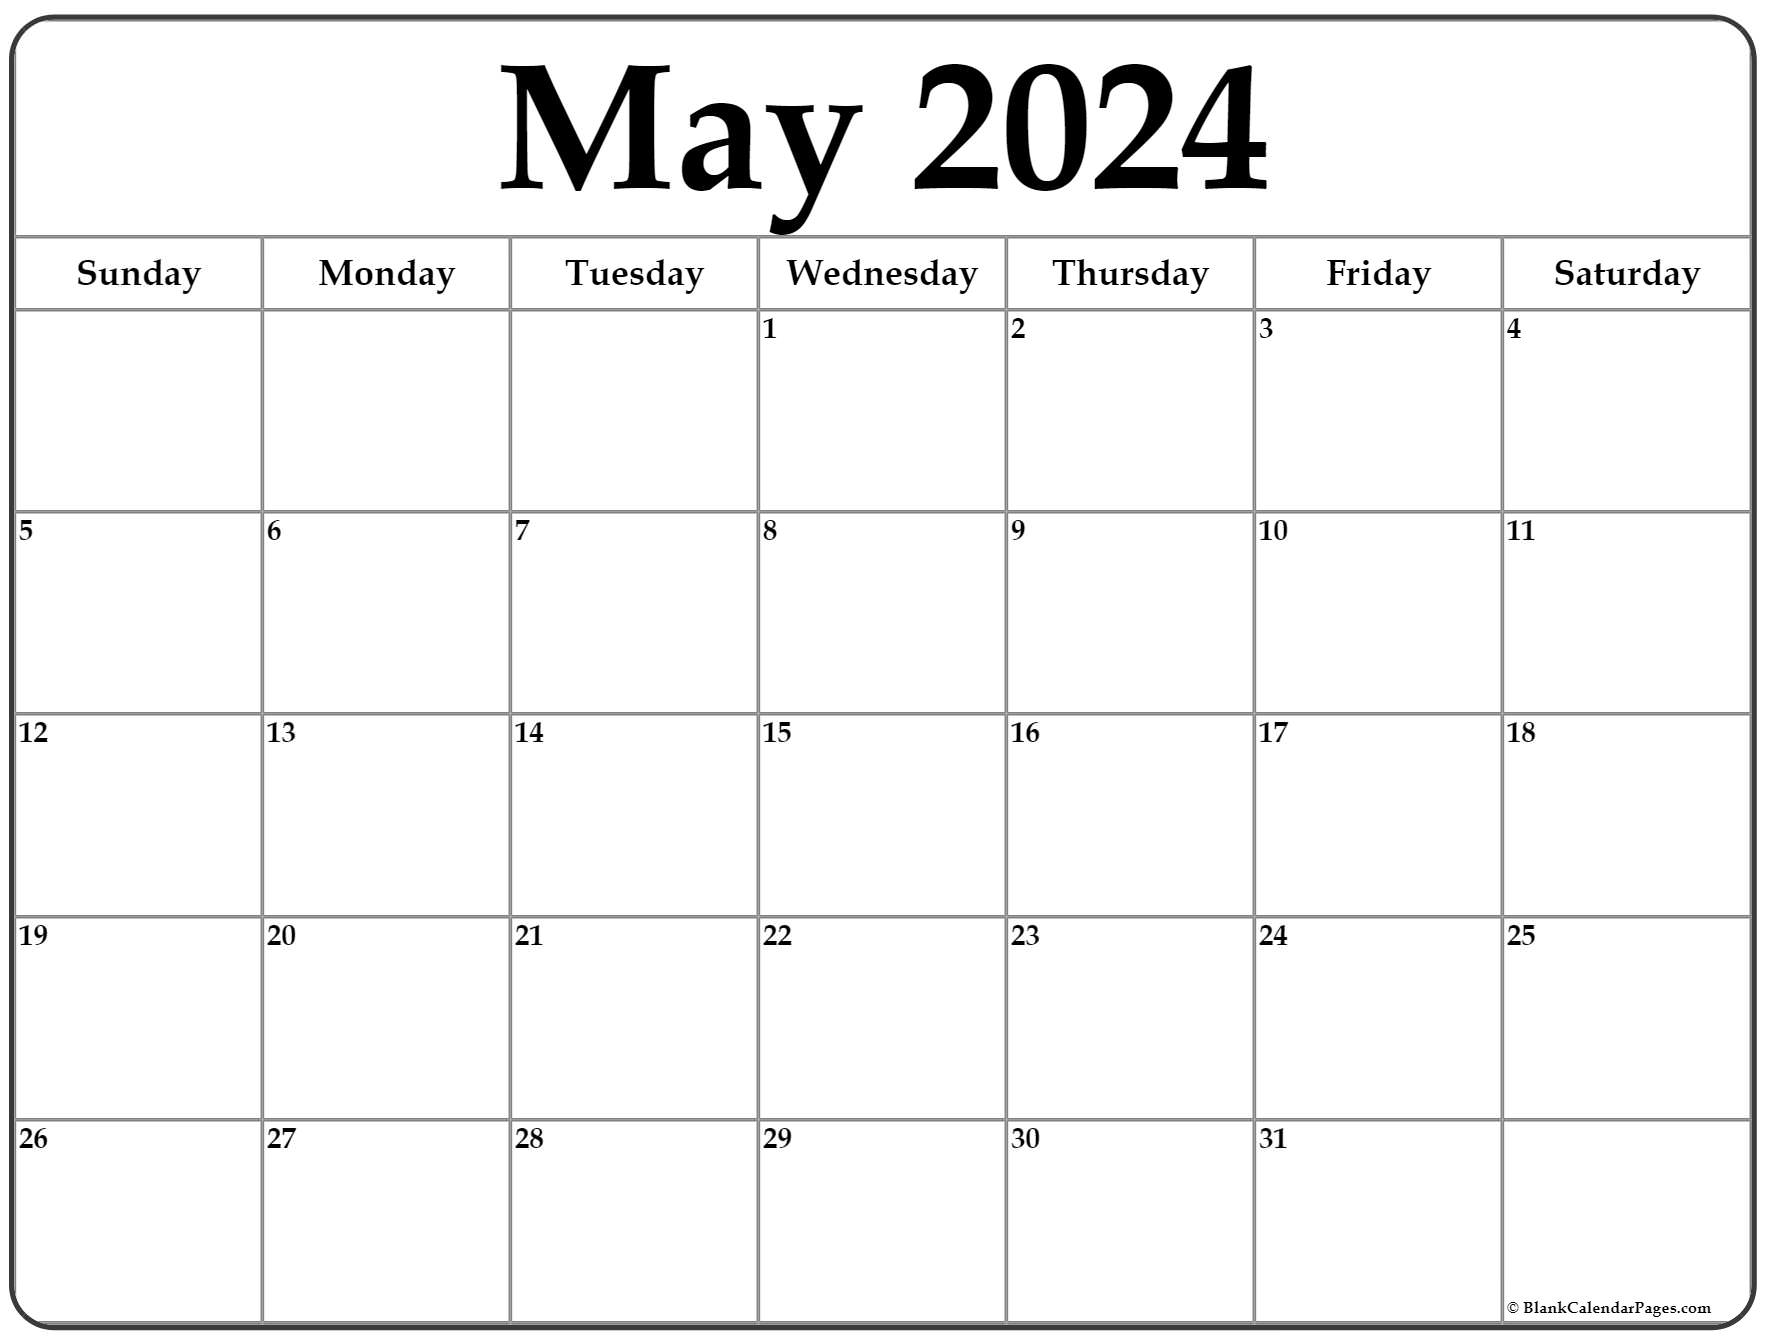 May 2022 Free Printable Calendar May 2022 Calendar | Free Printable Calendar Templates